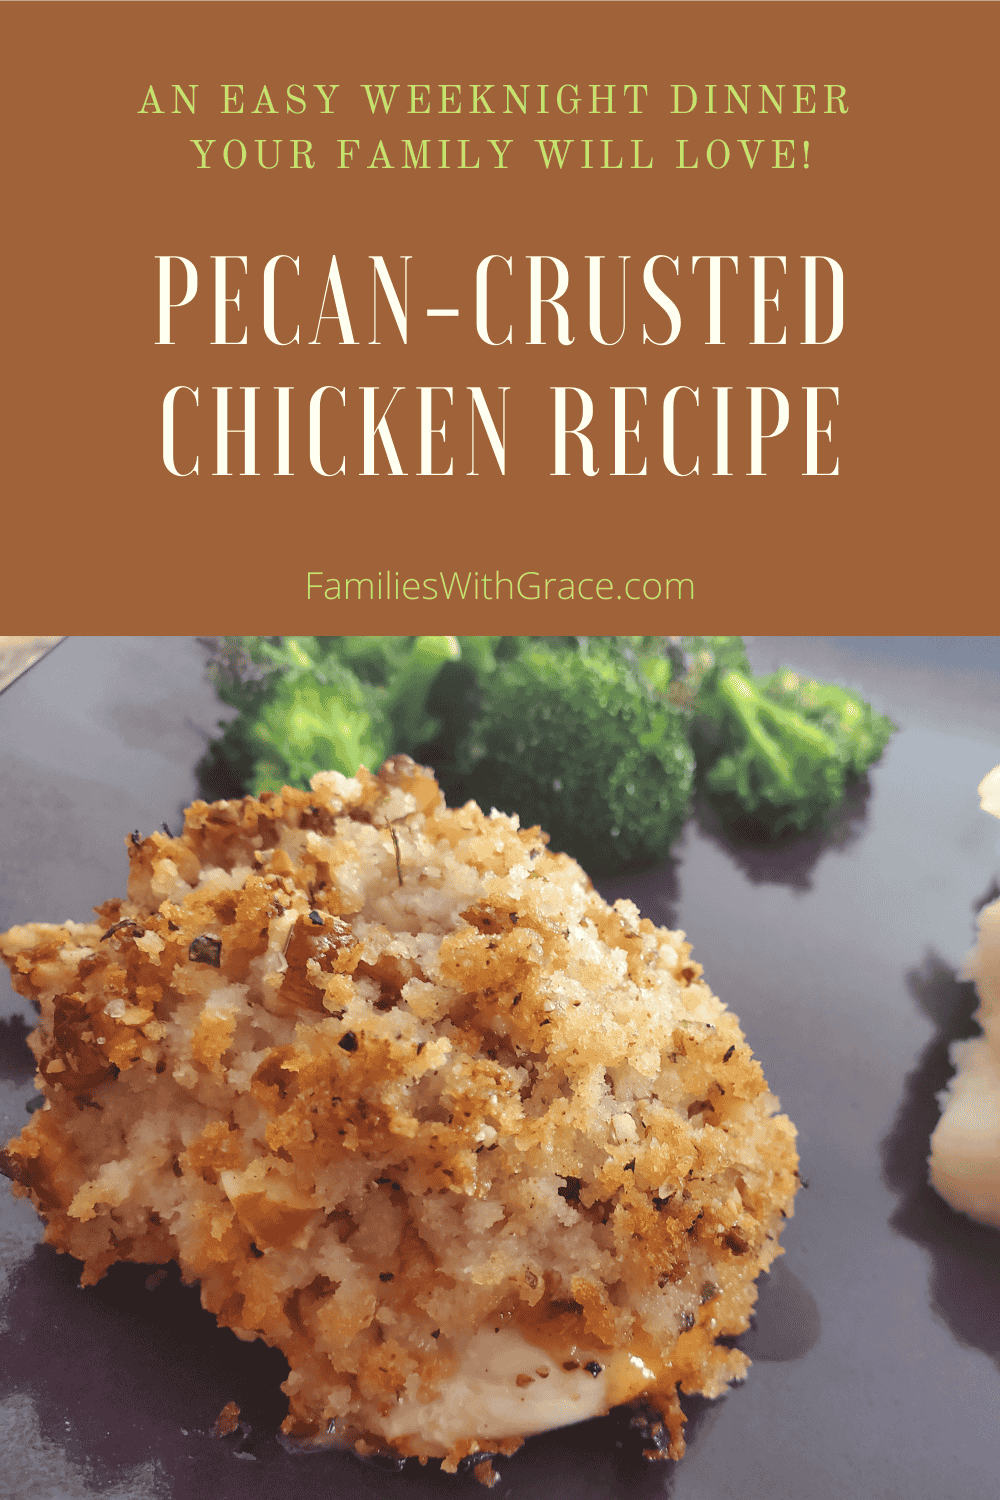 Pecan-crusted chicken recipe